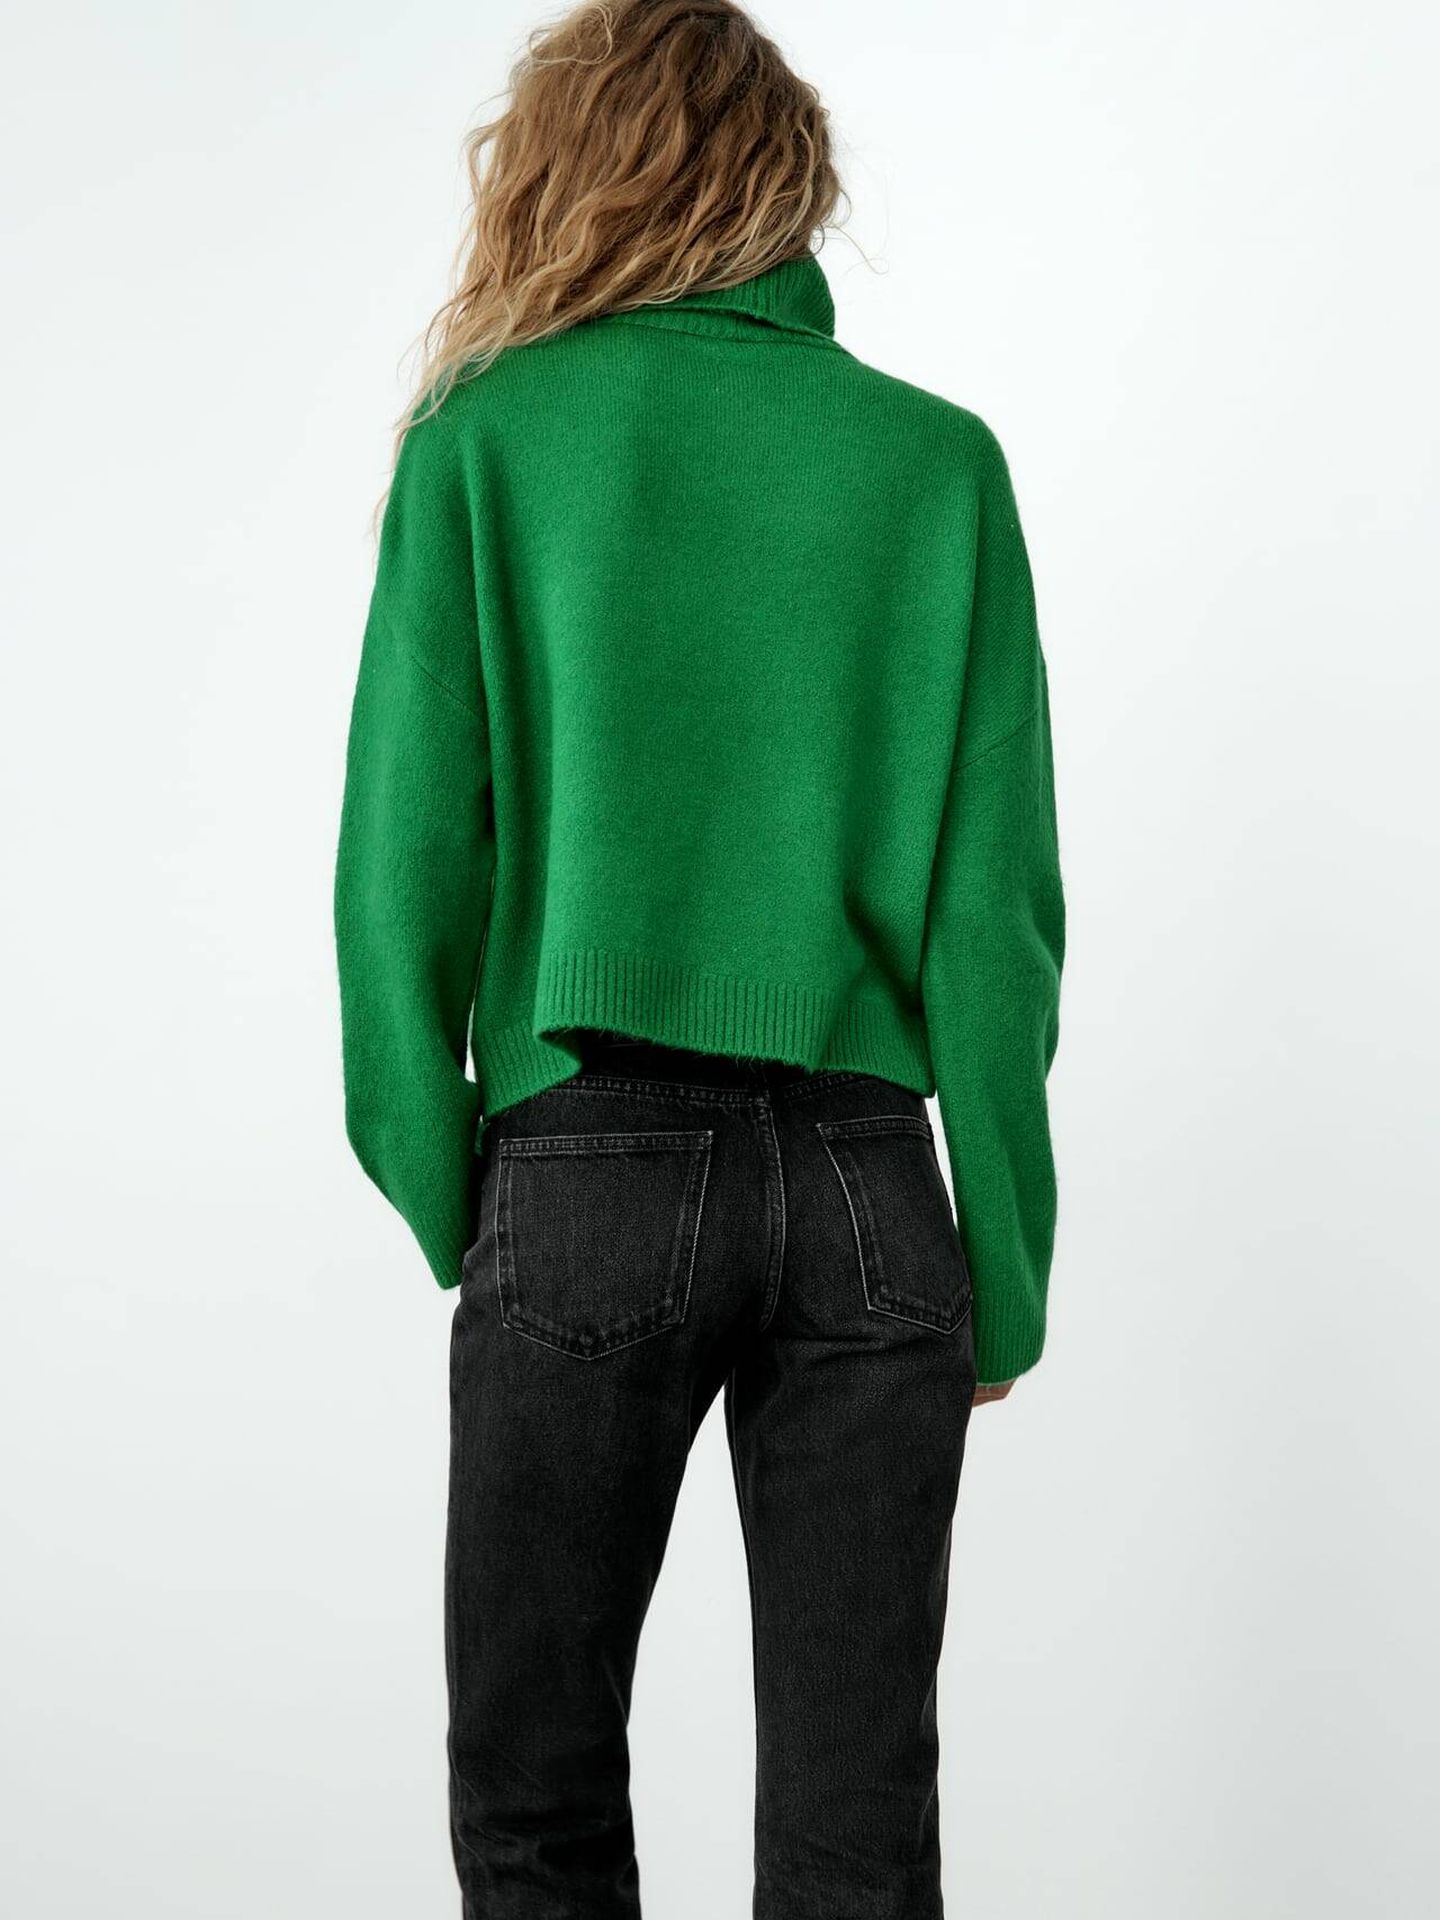 Jersey verde de moda. (Zara/Cortesía)